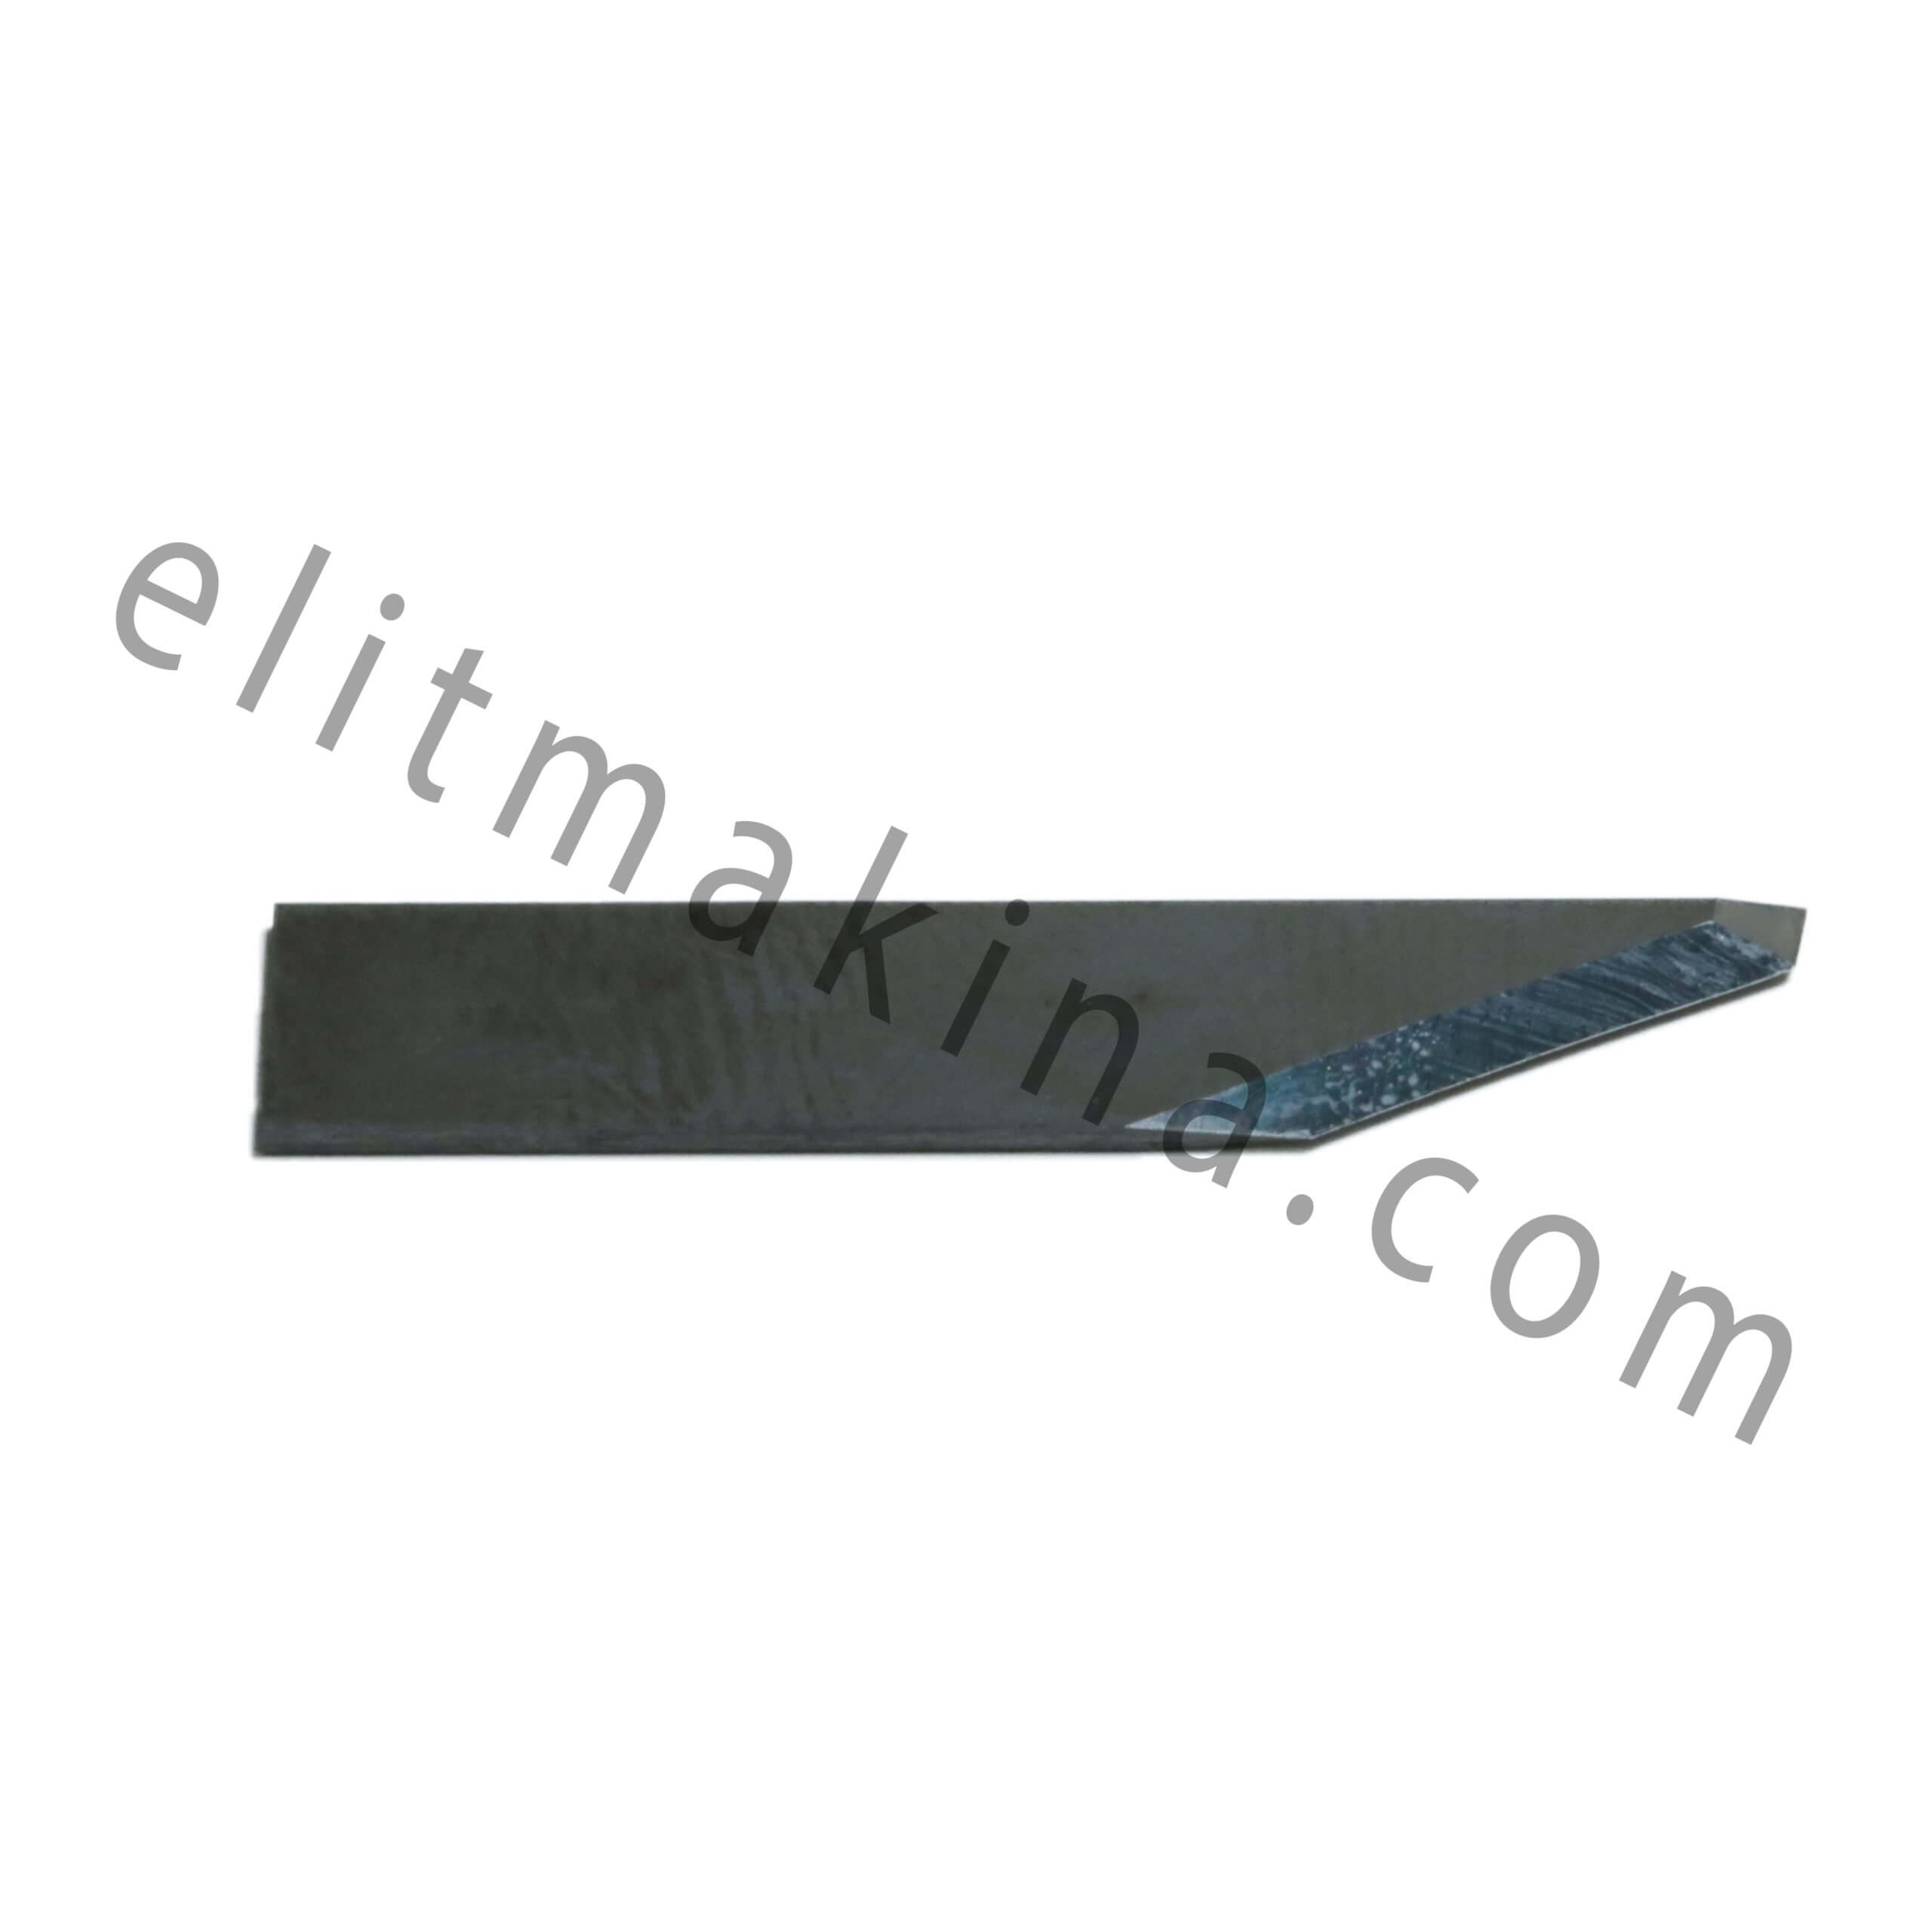 01030911 1.0mm Knife For Salpa And Fiber